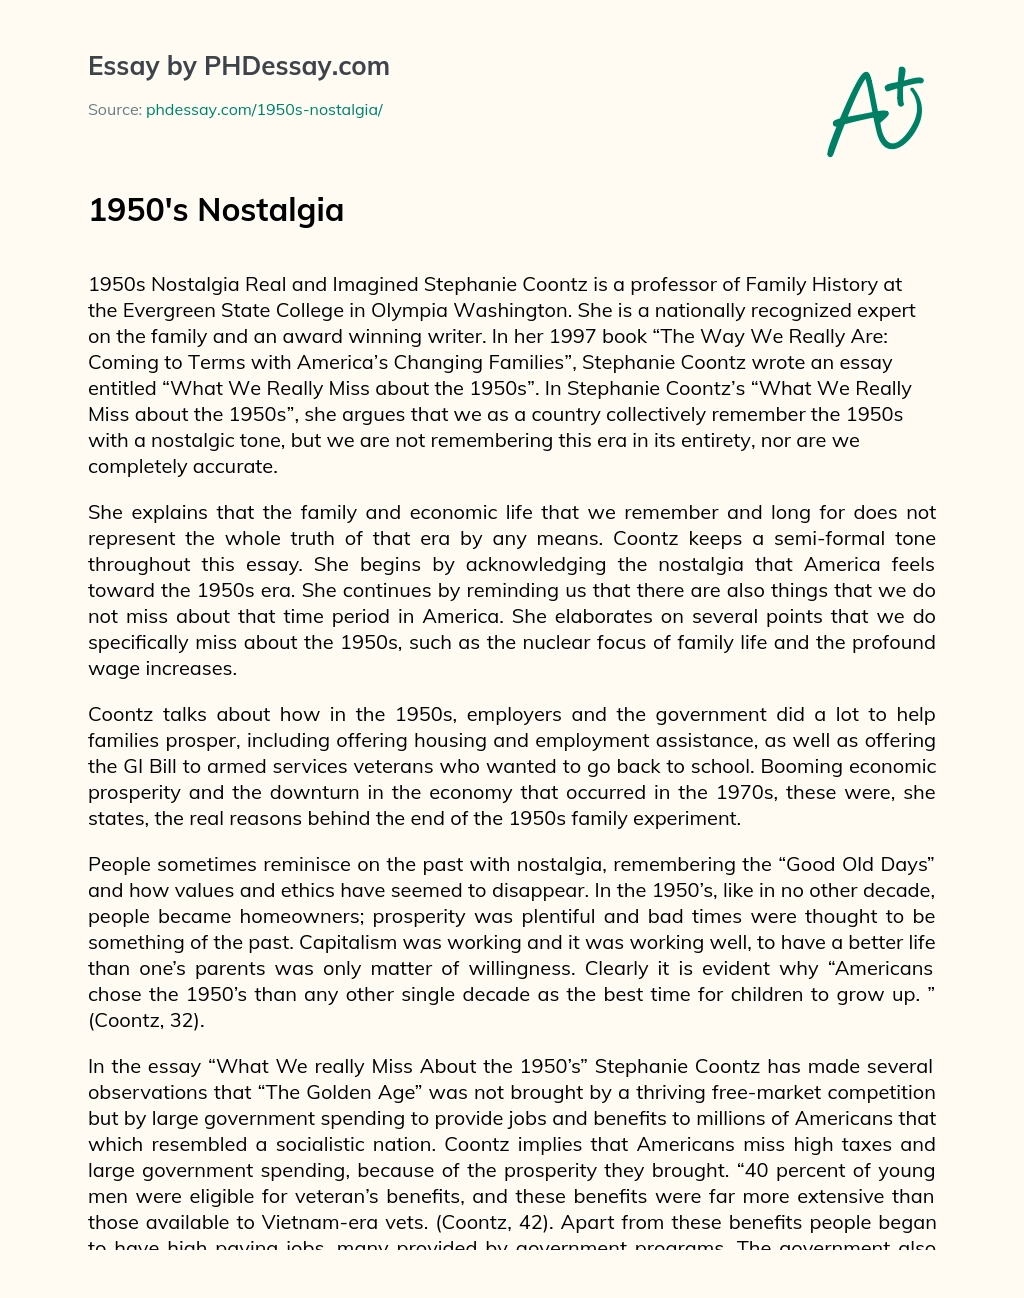 1950’s Nostalgia essay